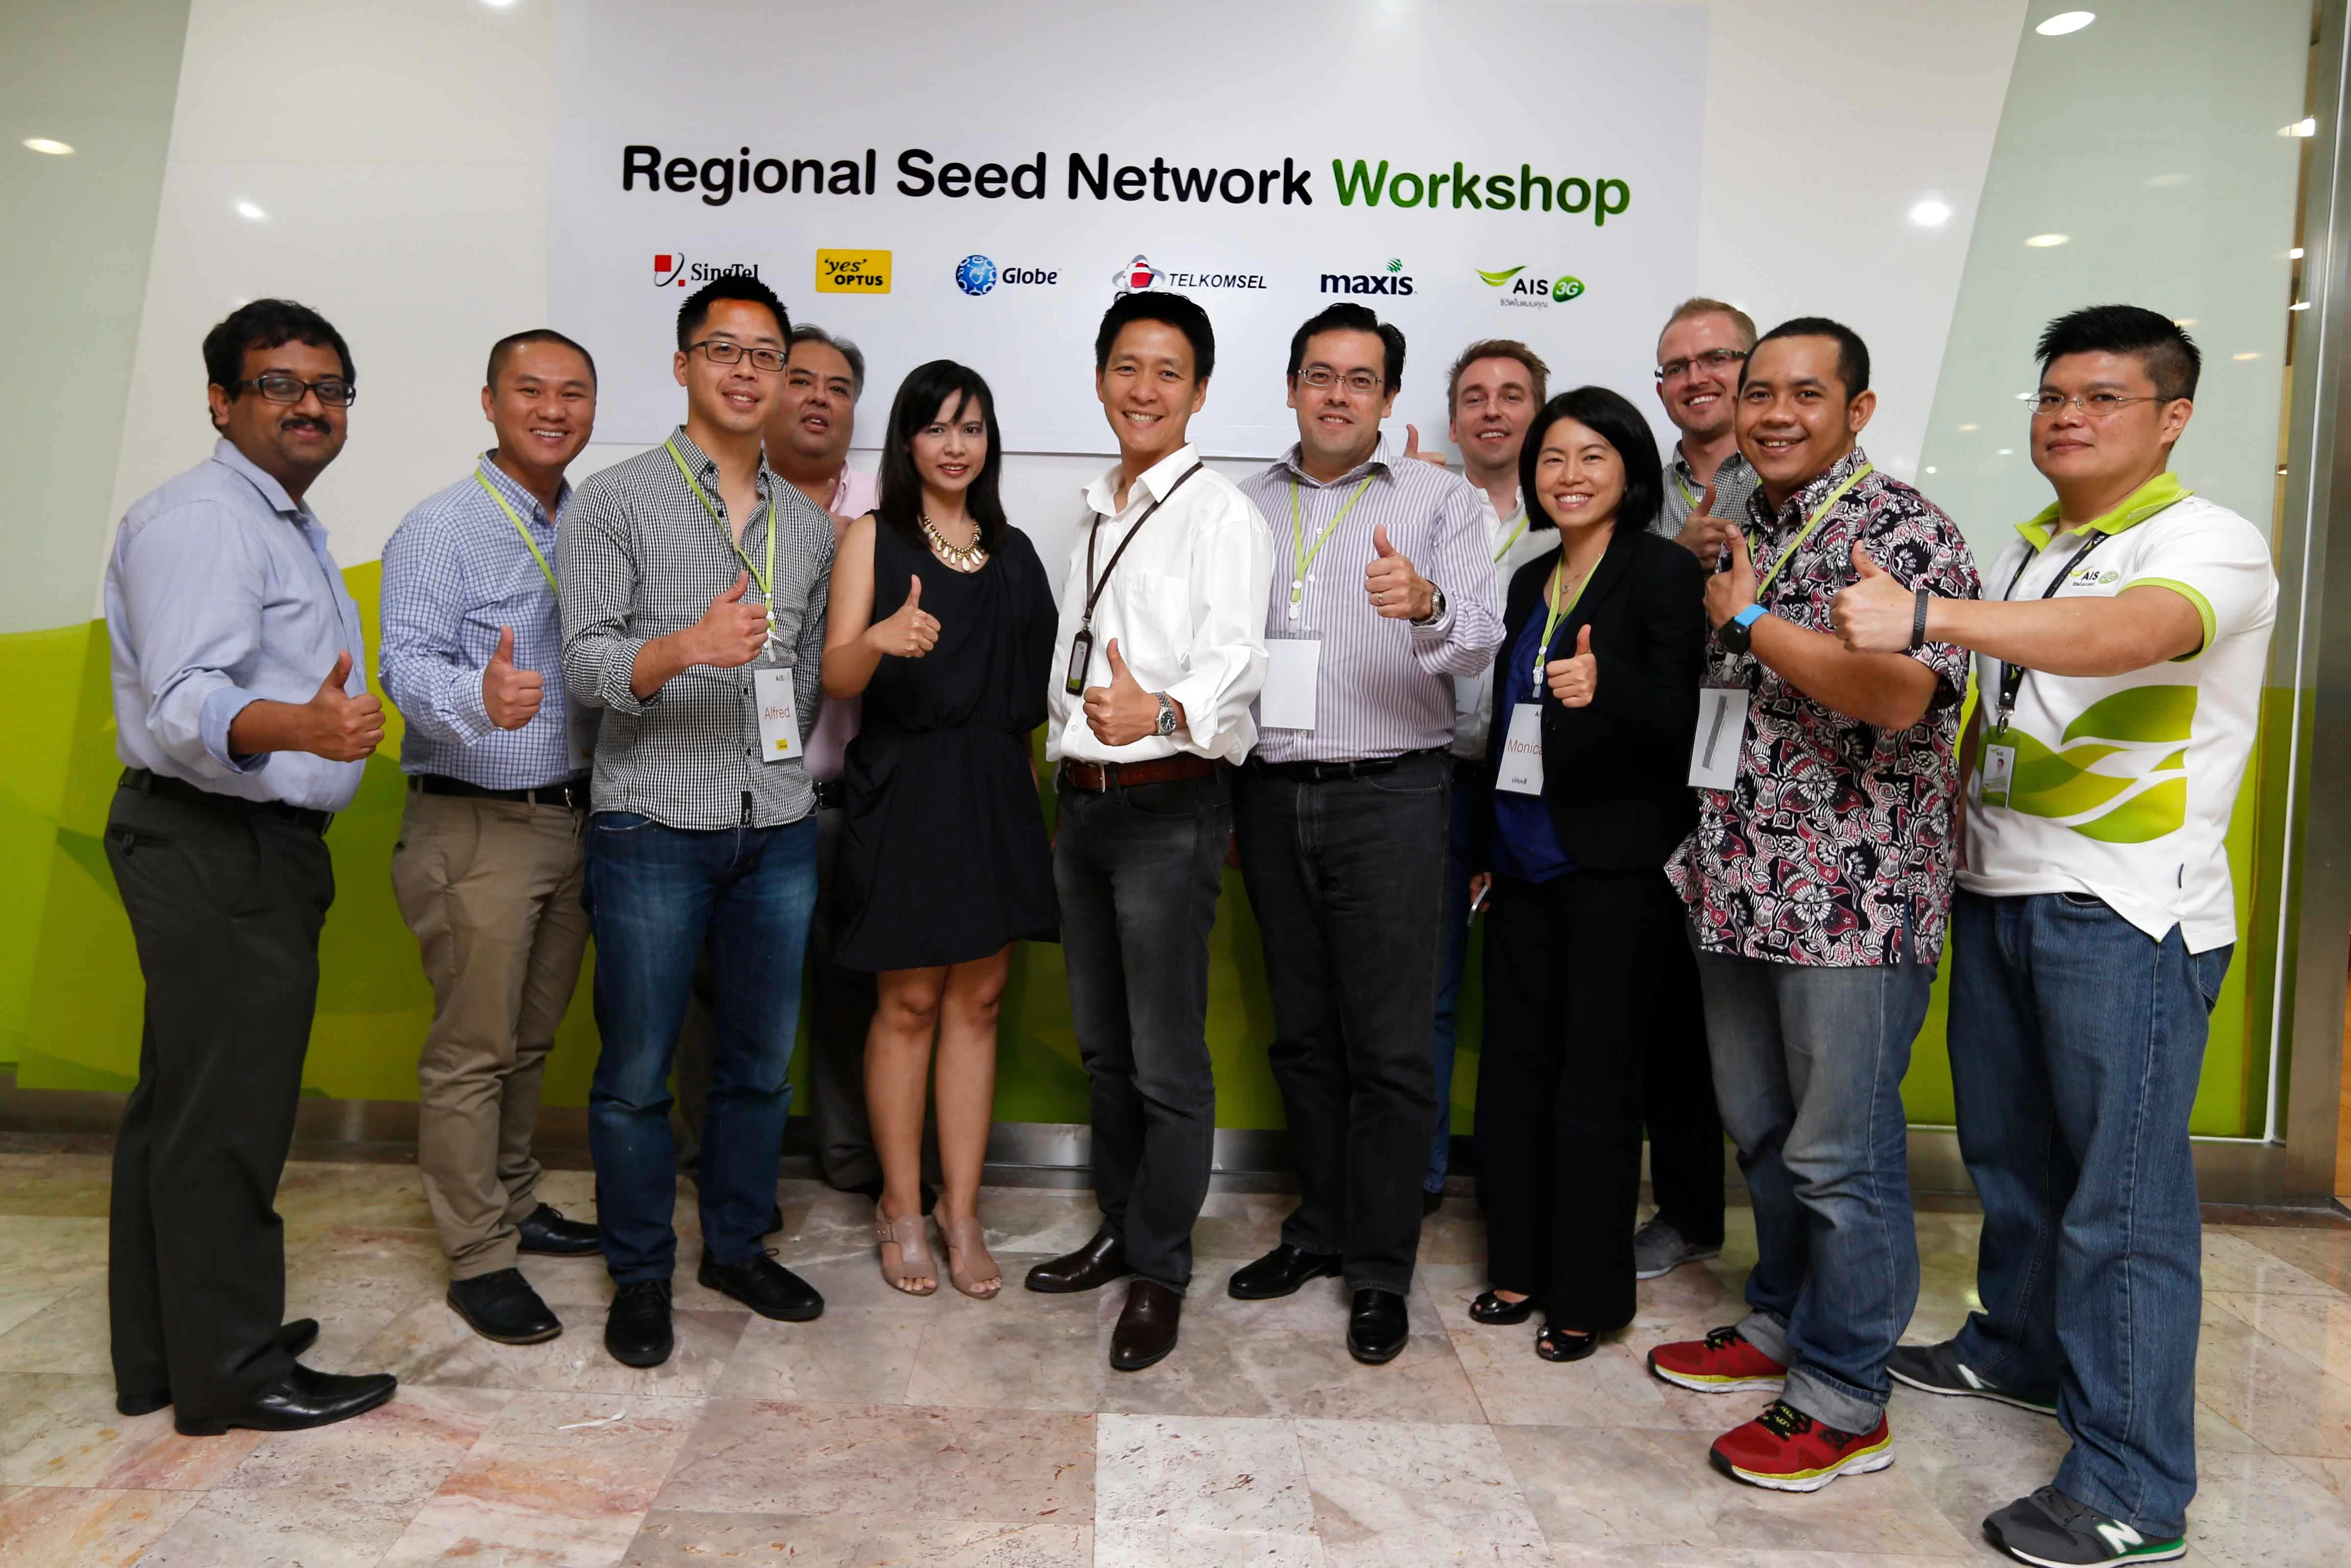 Startup ระดับภูมิภาค | AIS | ประชาสัมพันธ์: เอไอเอสรวมพลังบริษัทในเครือ SingTel สร้างคอมมูนิตี้ Startup จัดการประชุม “Regional Seed Network” ผลักดัน Startup สู่สากล